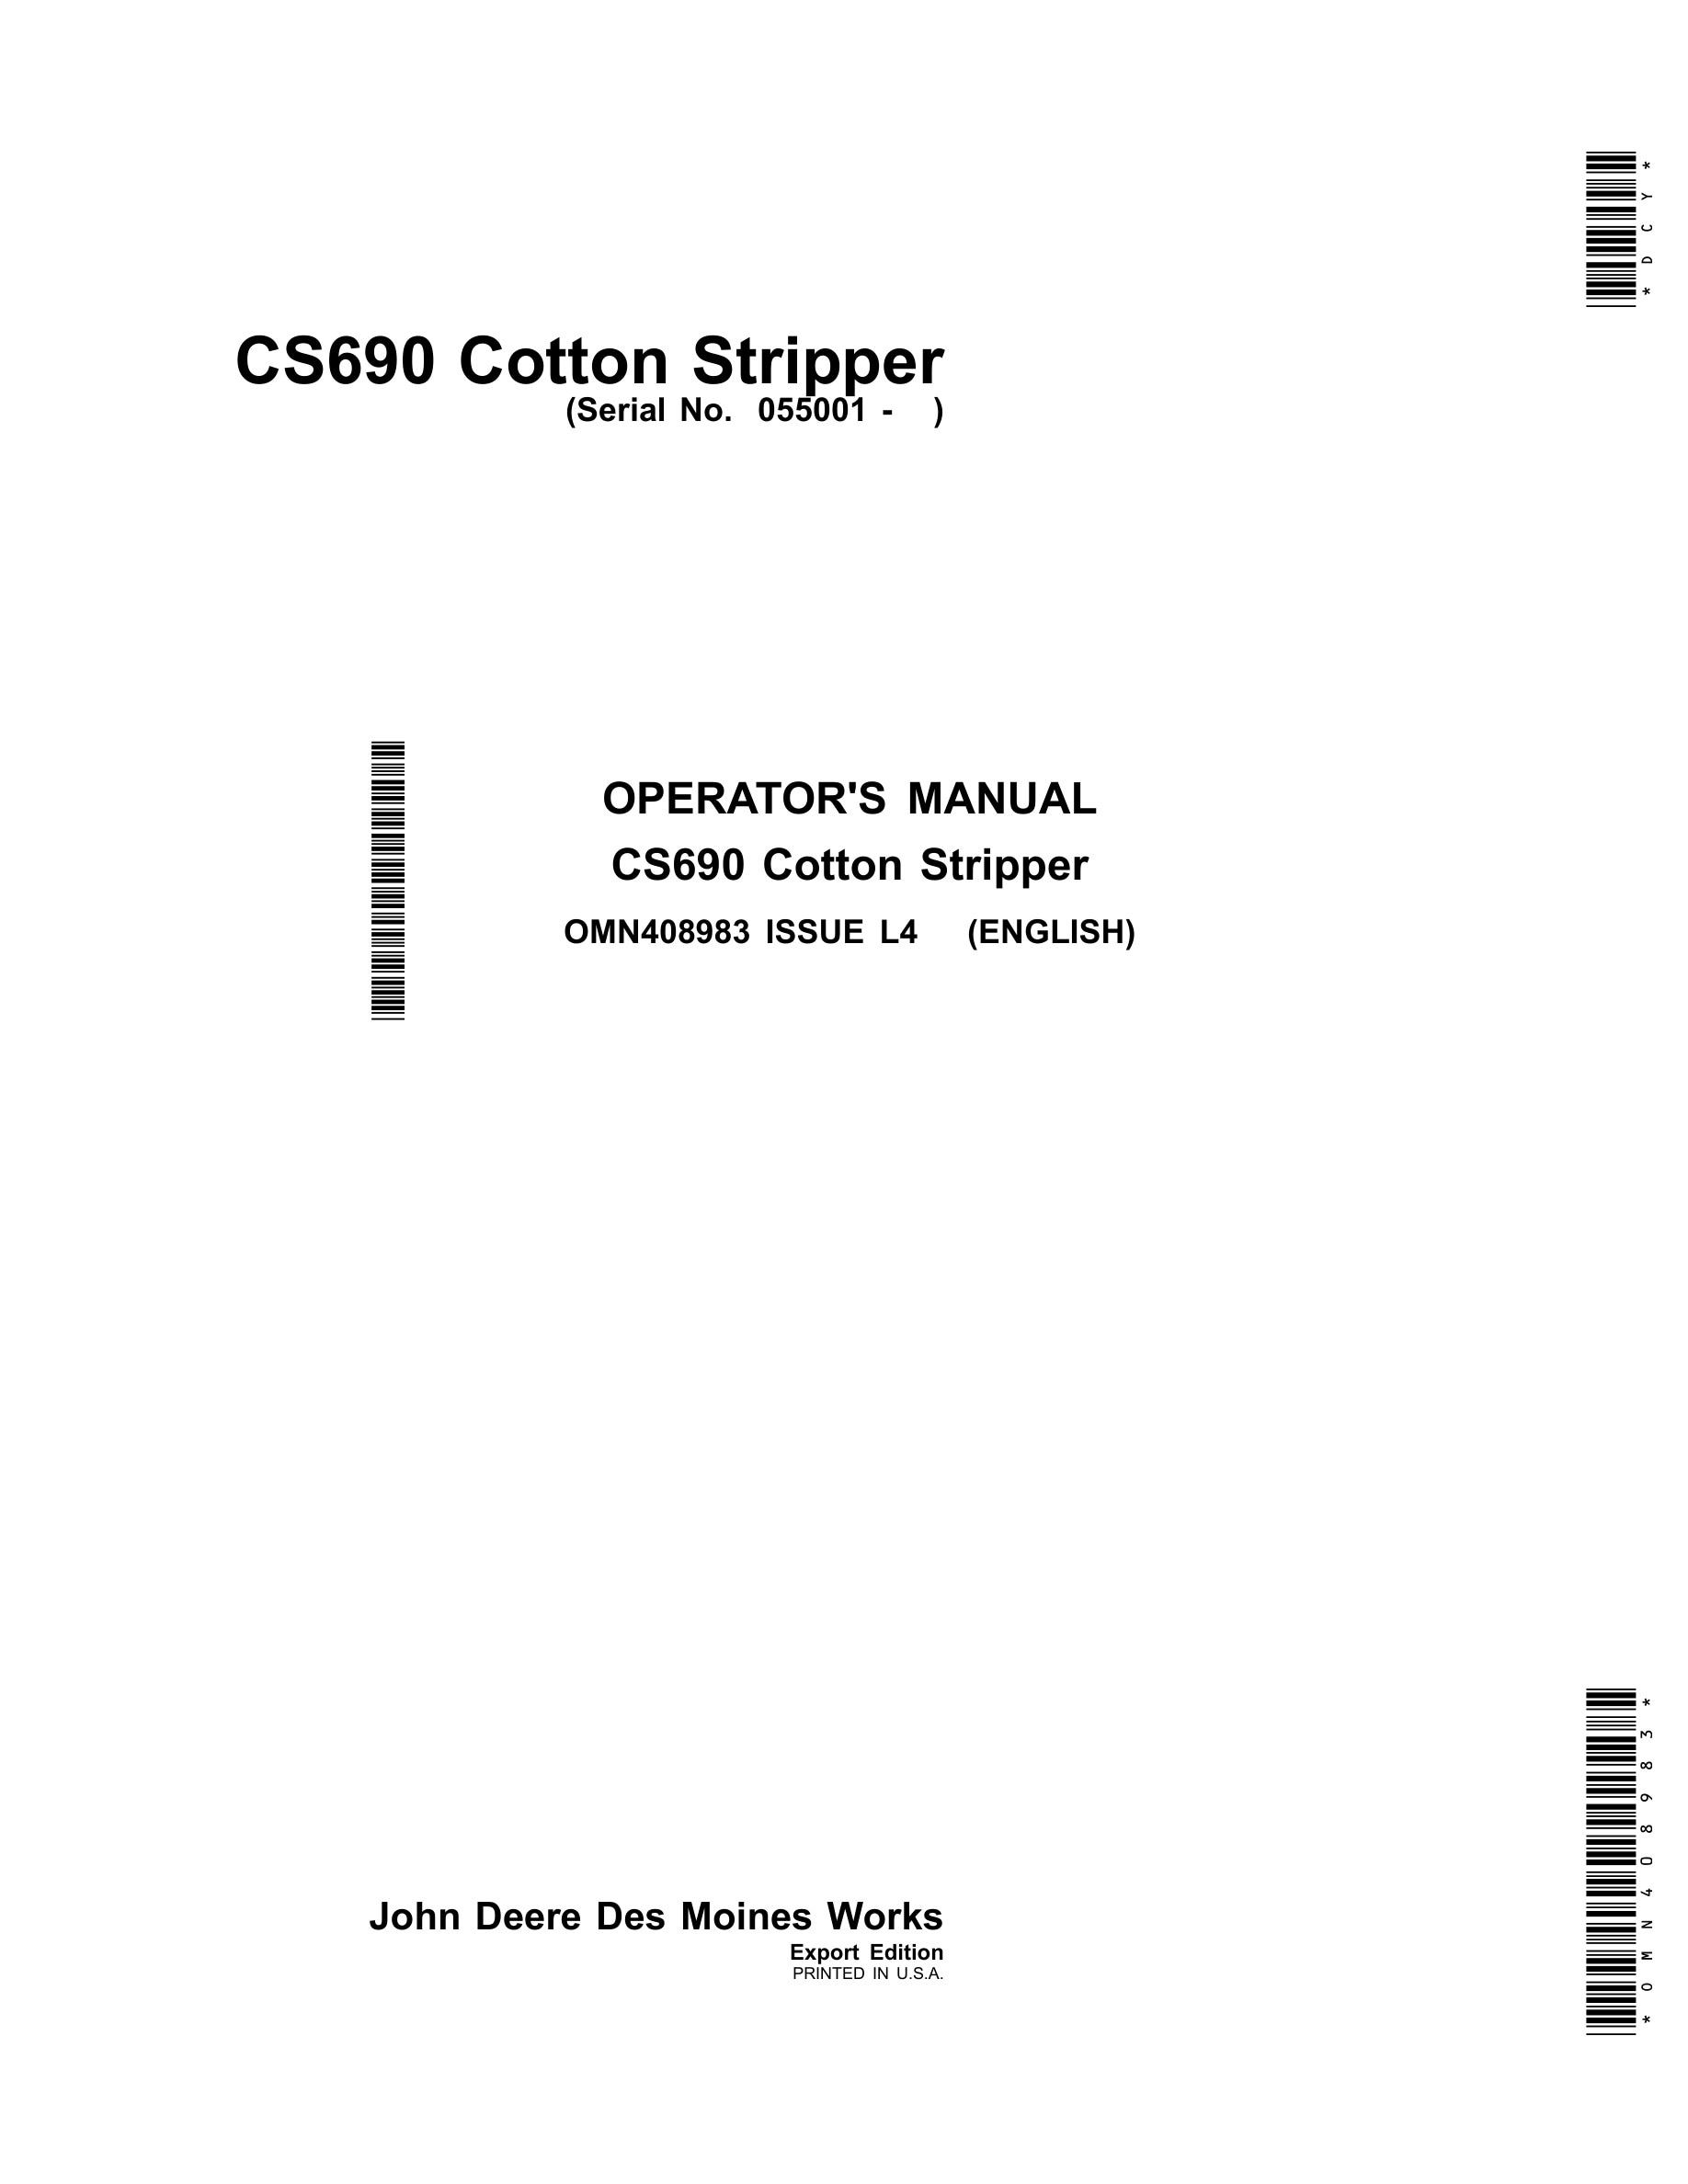 John Deere CS690 Cotton Sripper Operator Manual OMN408983-1